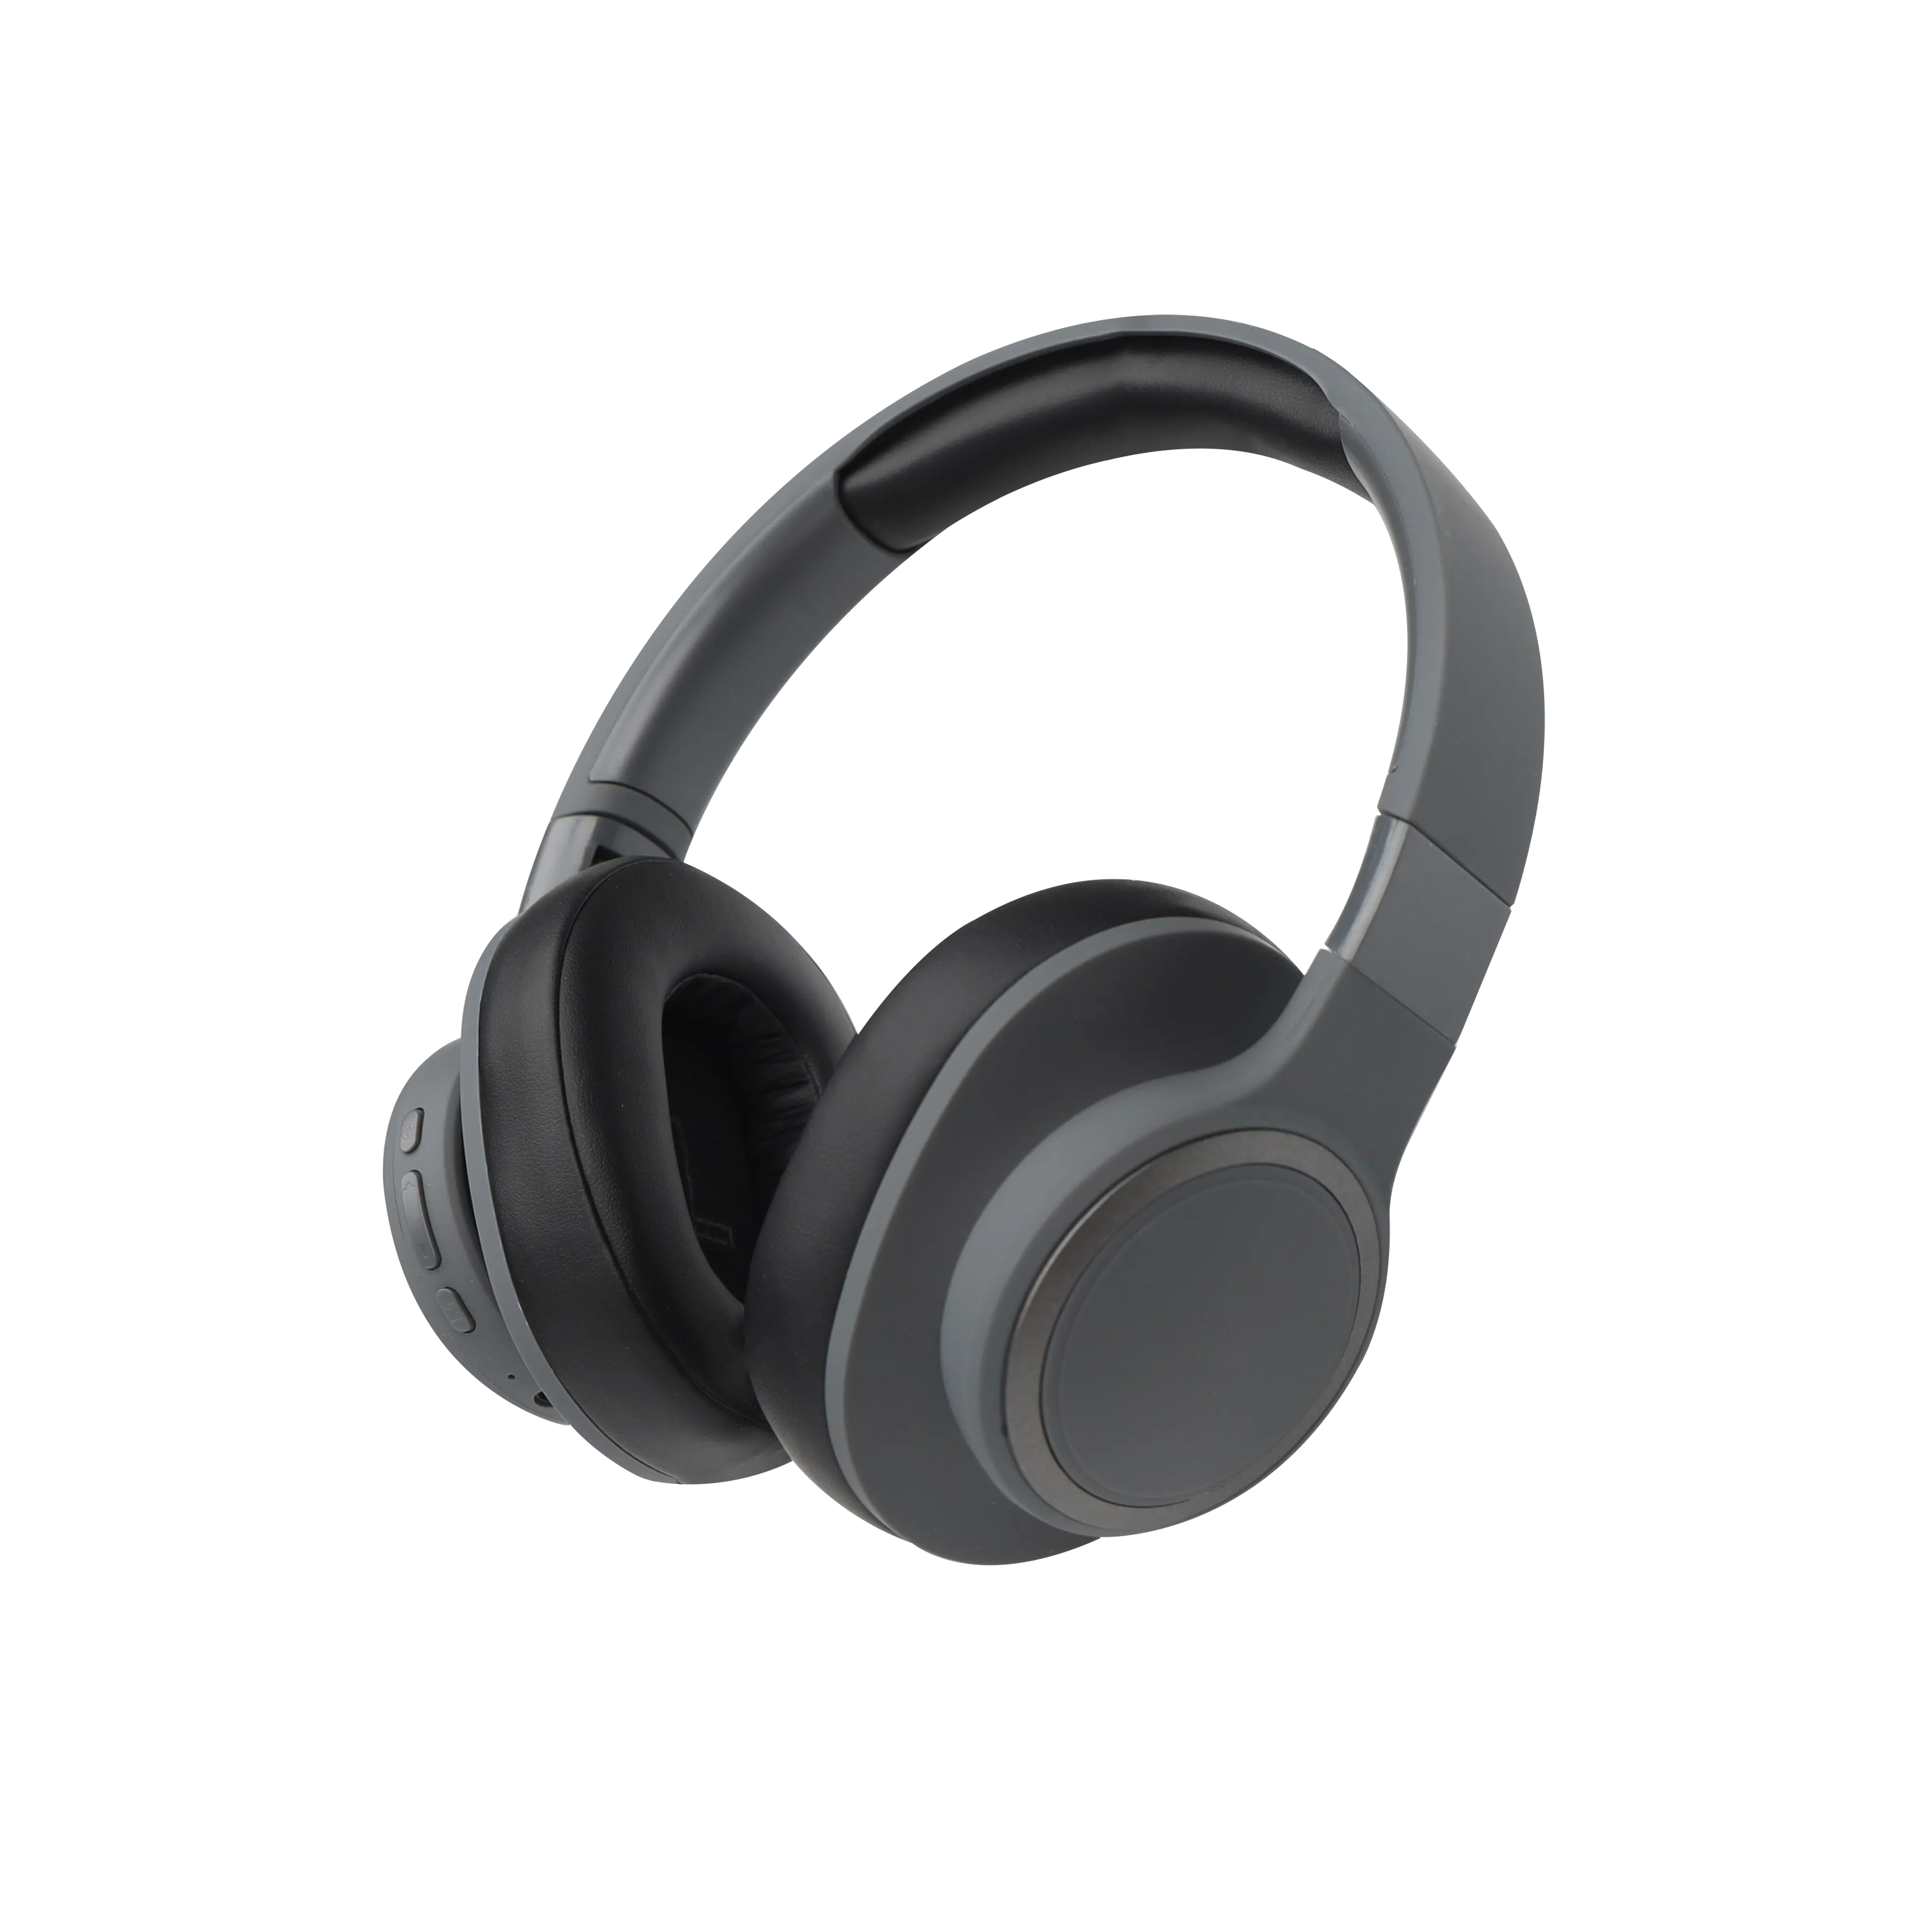 Alta qualidade Rename Max Headphone Earphone IPX5 impermeável sem fio Earbuds Earphone Headphone